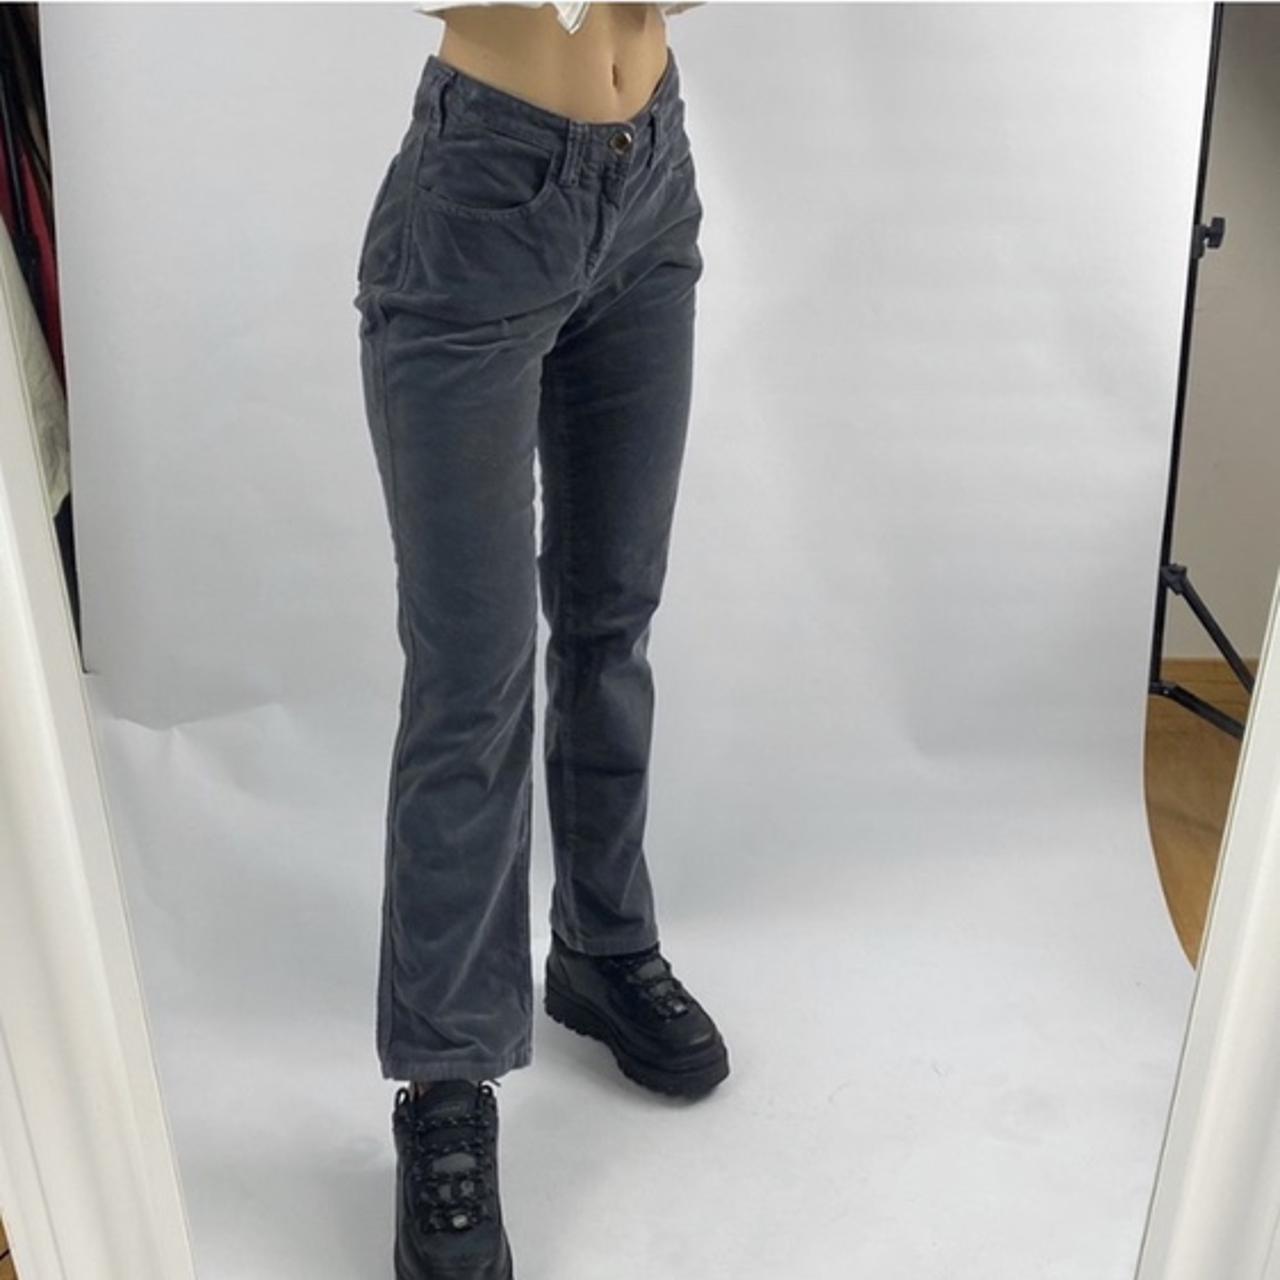 Brushed velvet Armani straight leg jeans 👖 ️ would... - Depop